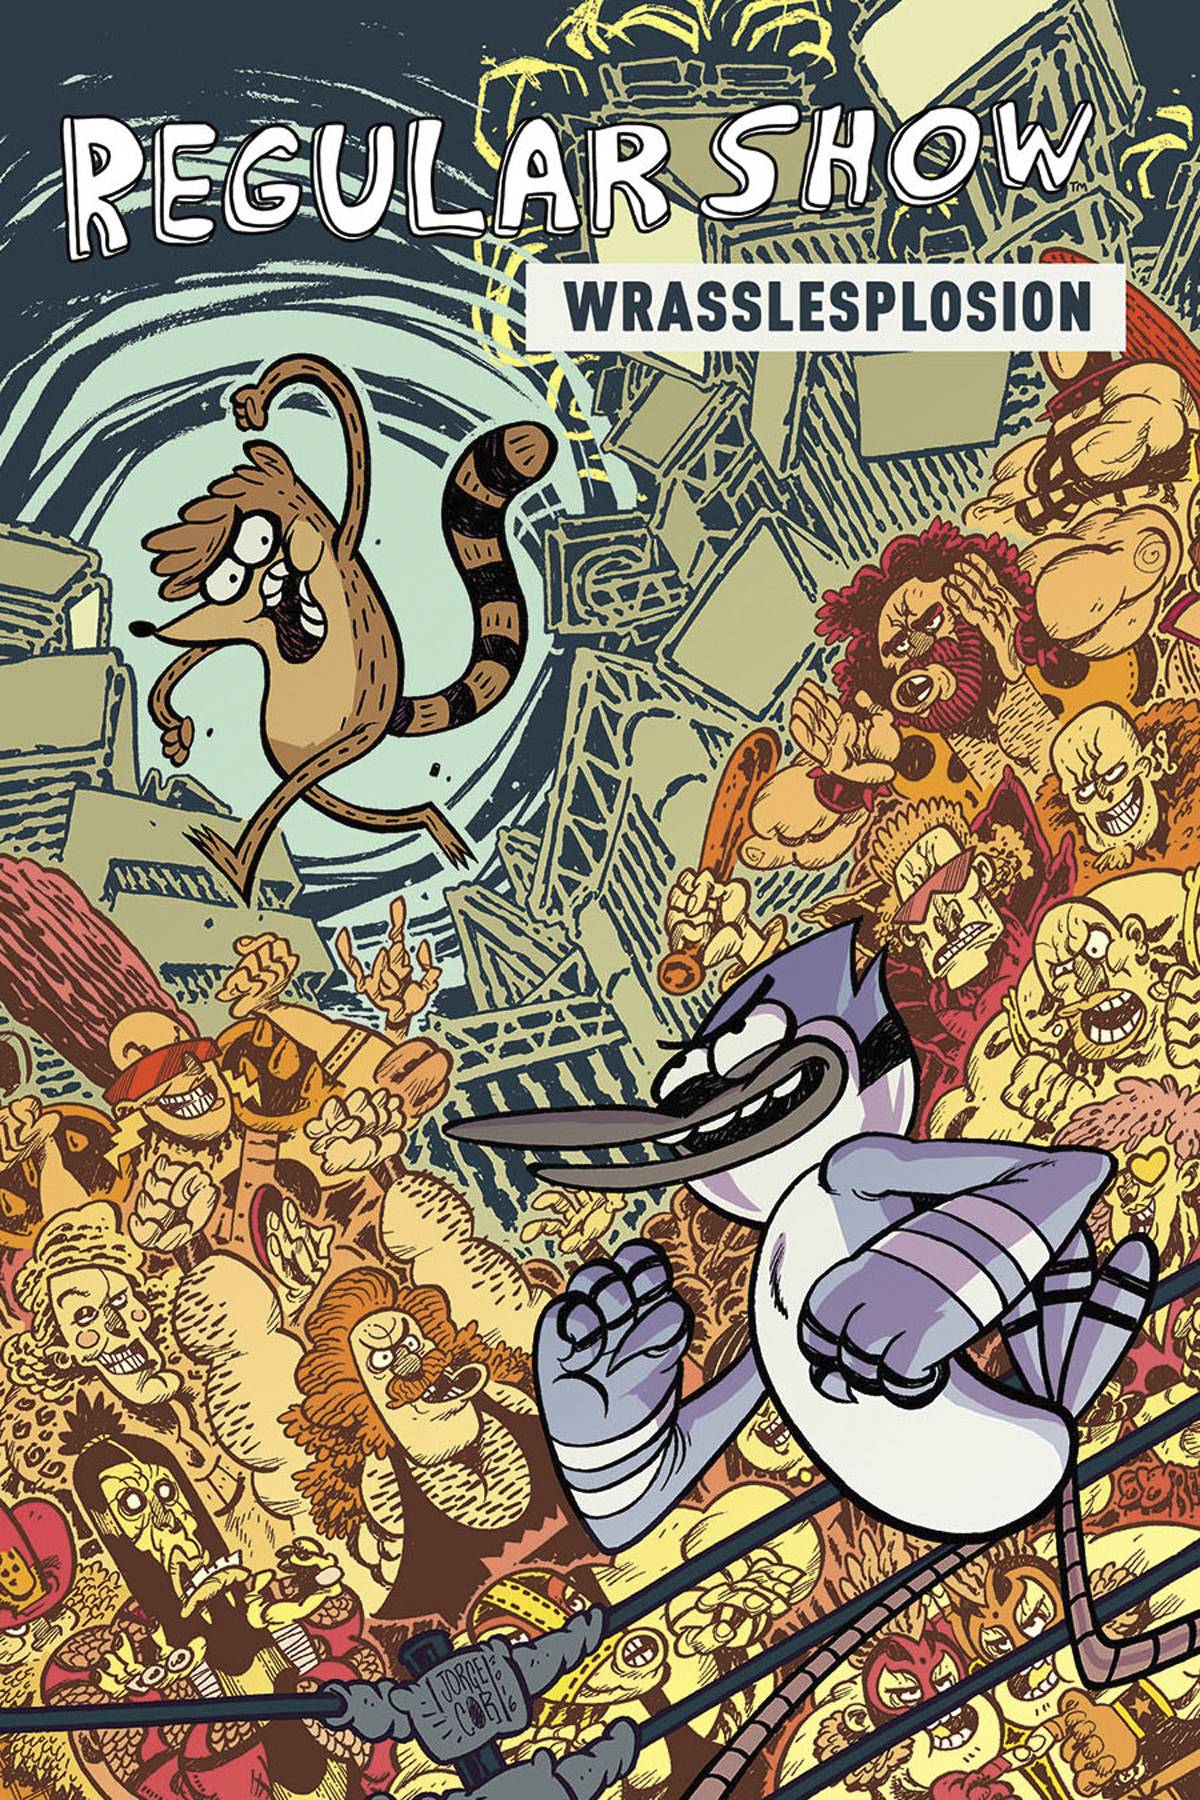 Regular Show Original Graphic Novel Volume 4 Wrasslesplosion